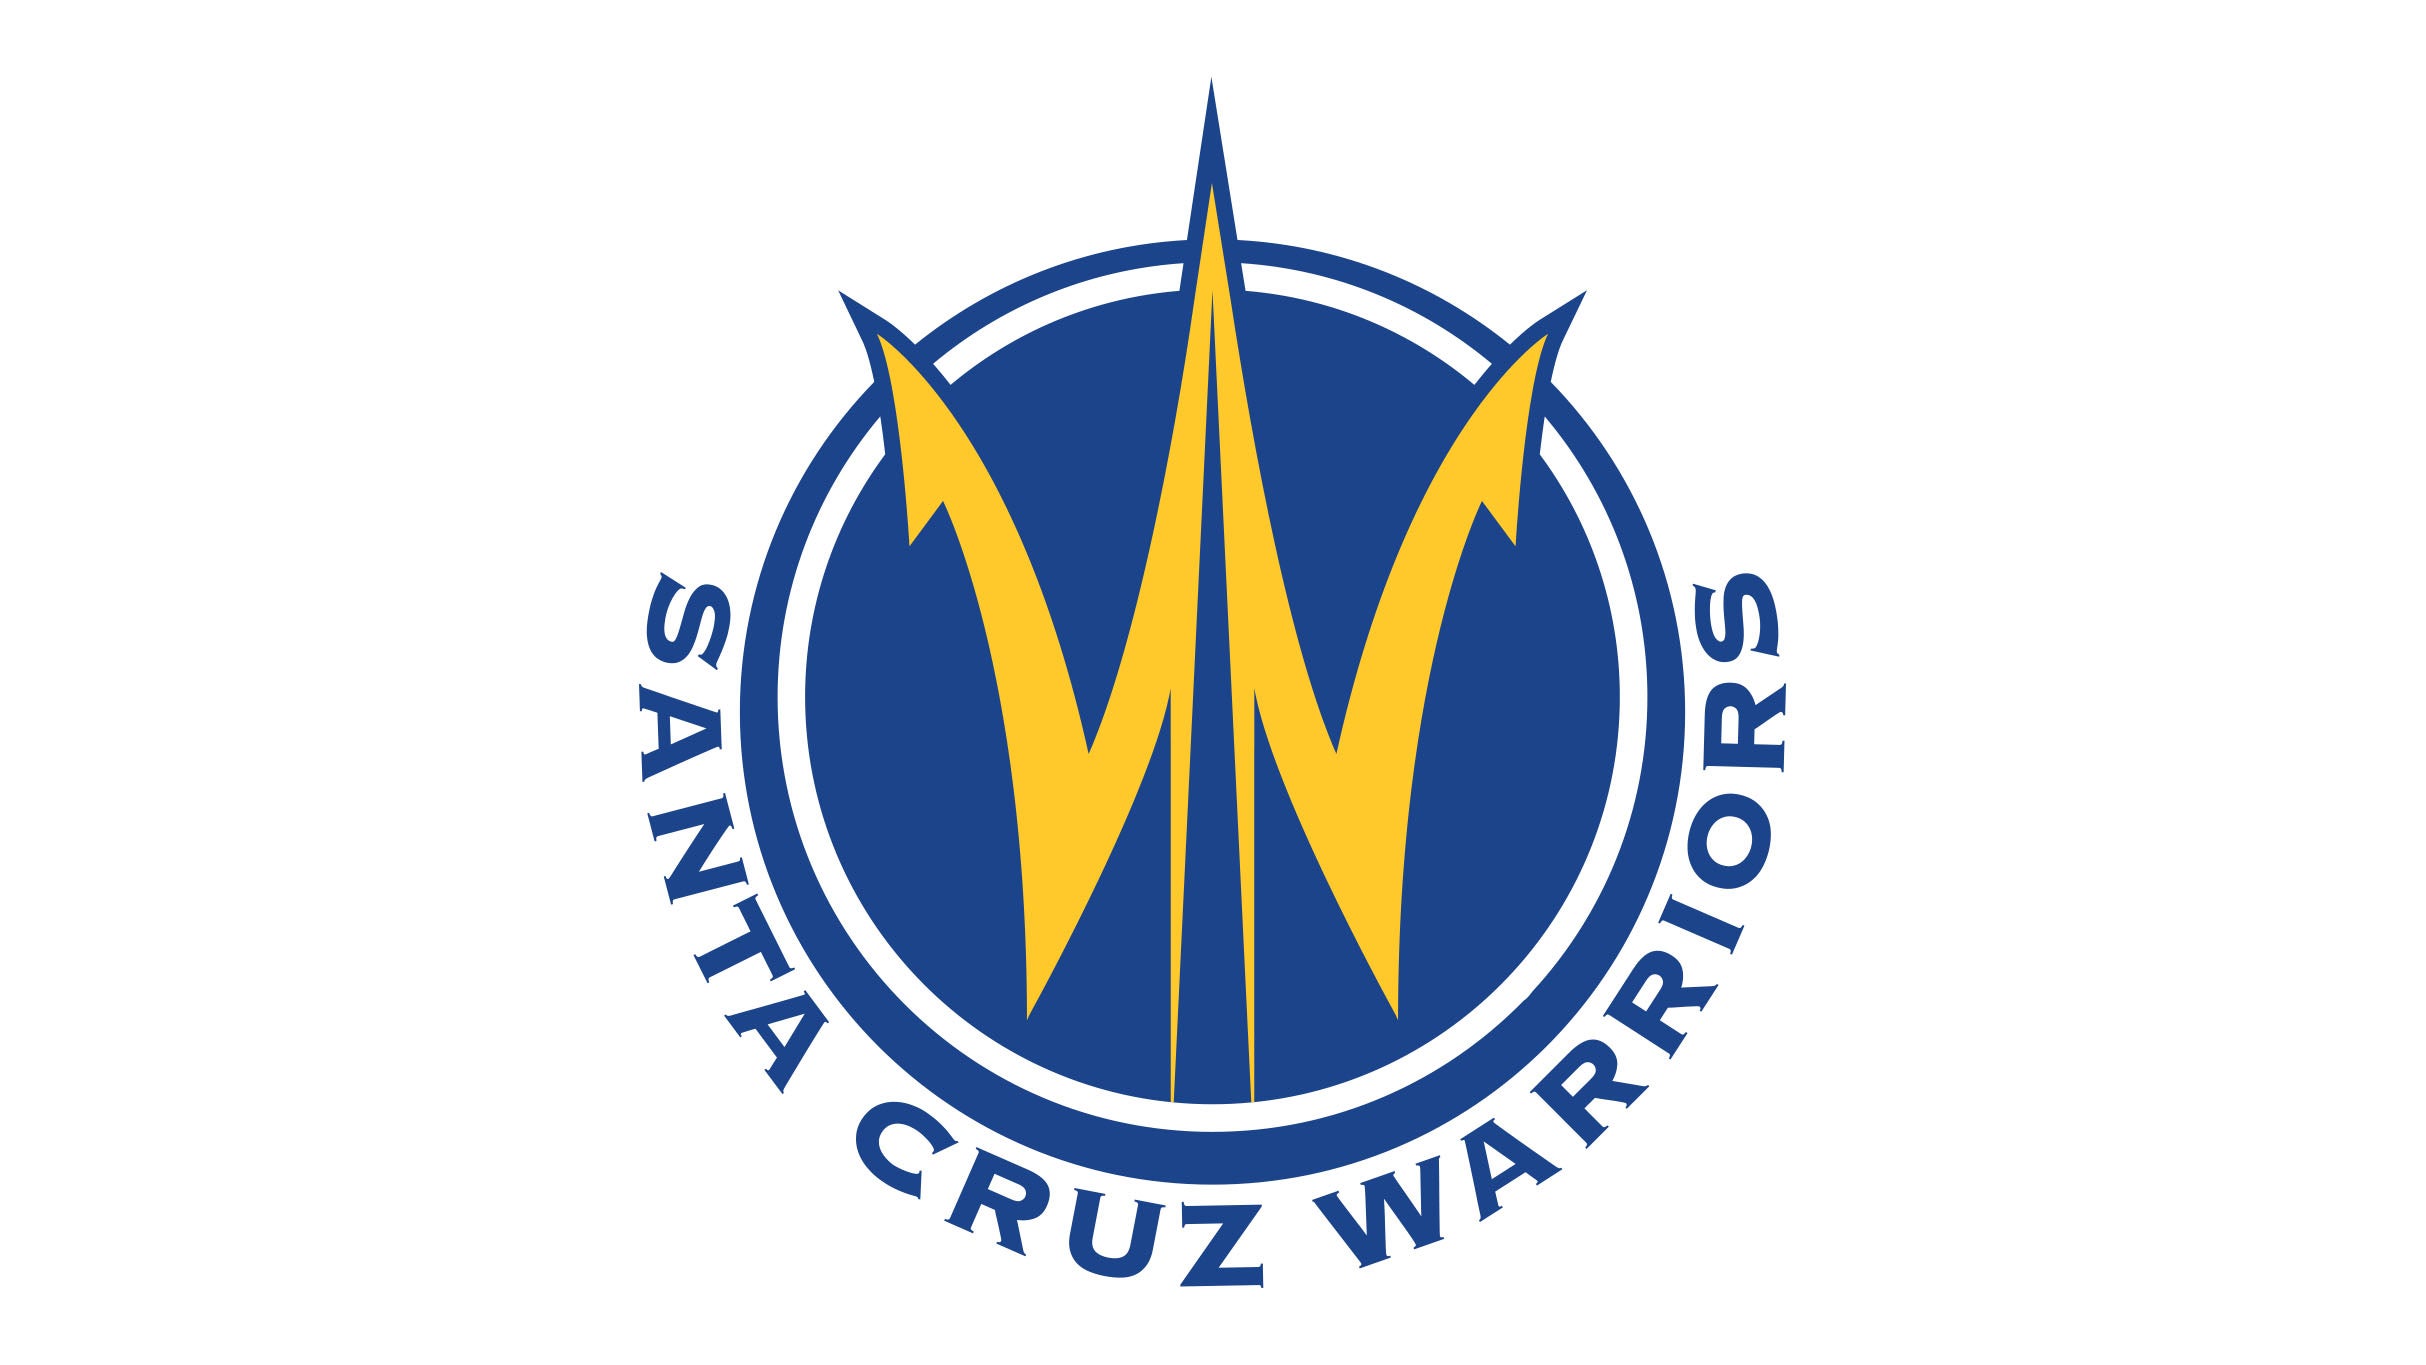 Santa Cruz Warriors vs. NBA G League Ignite in Santa Cruz promo photo for Insider presale offer code